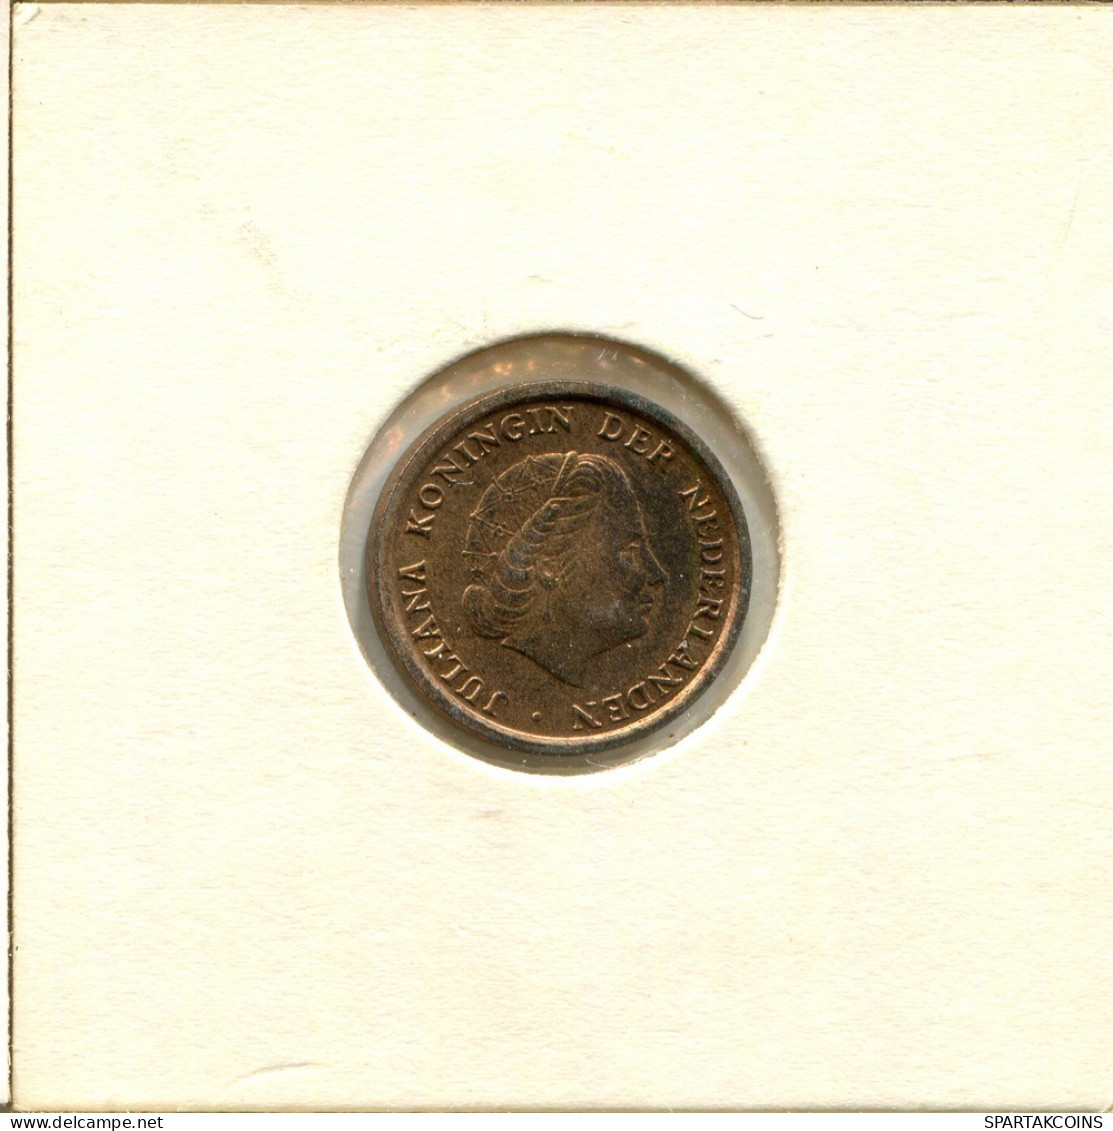 1 CENT 1971 NEERLANDÉS NETHERLANDS Moneda #AU391.E.A - 1948-1980: Juliana